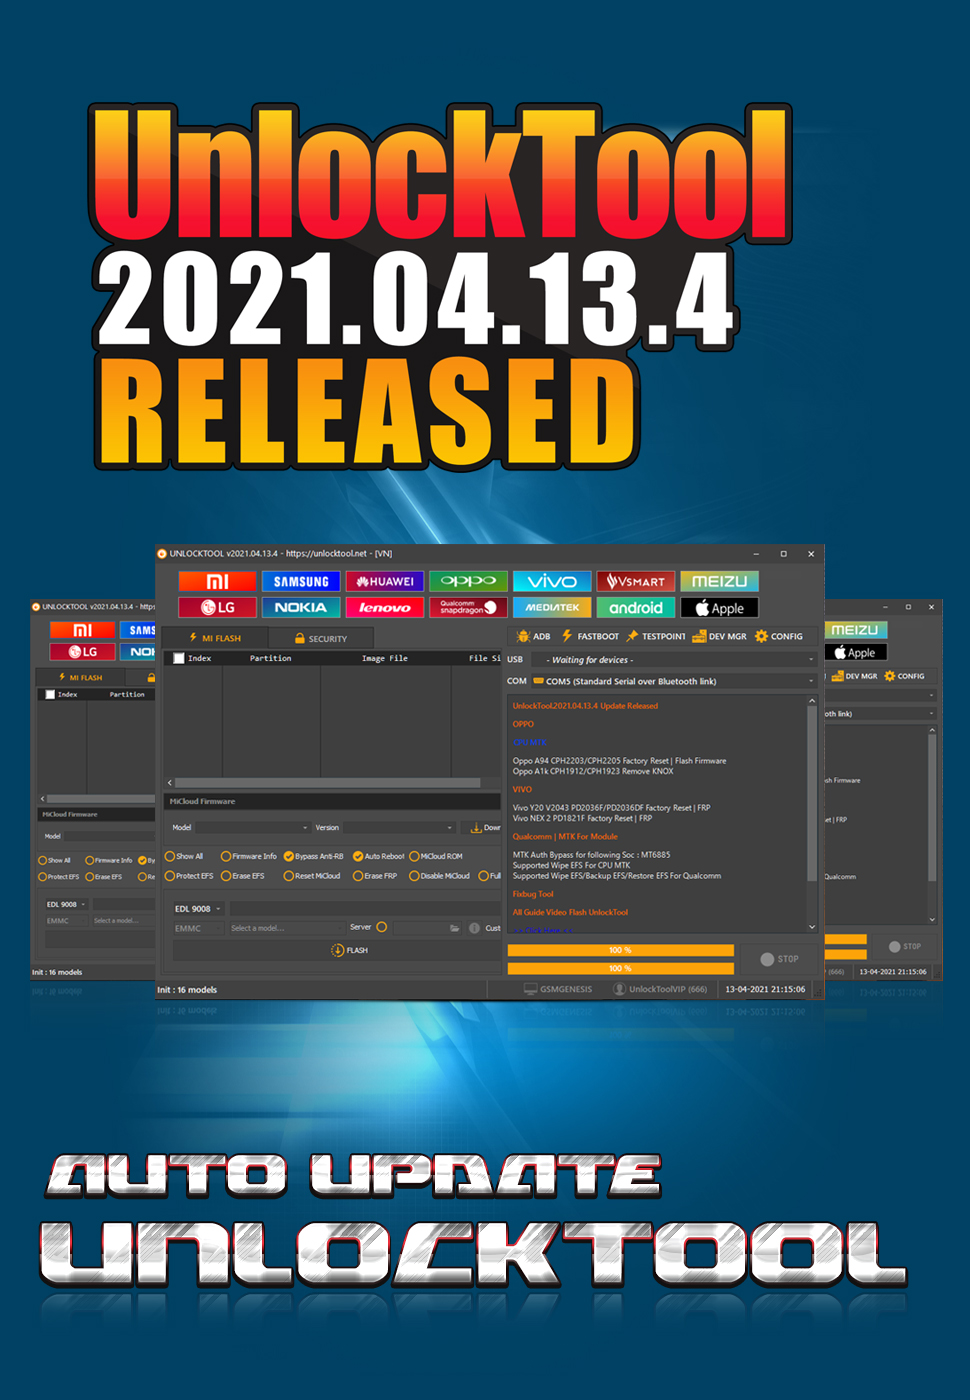 UnlockTool 2021.04.13.4 Released Update Auto, And MTK Module